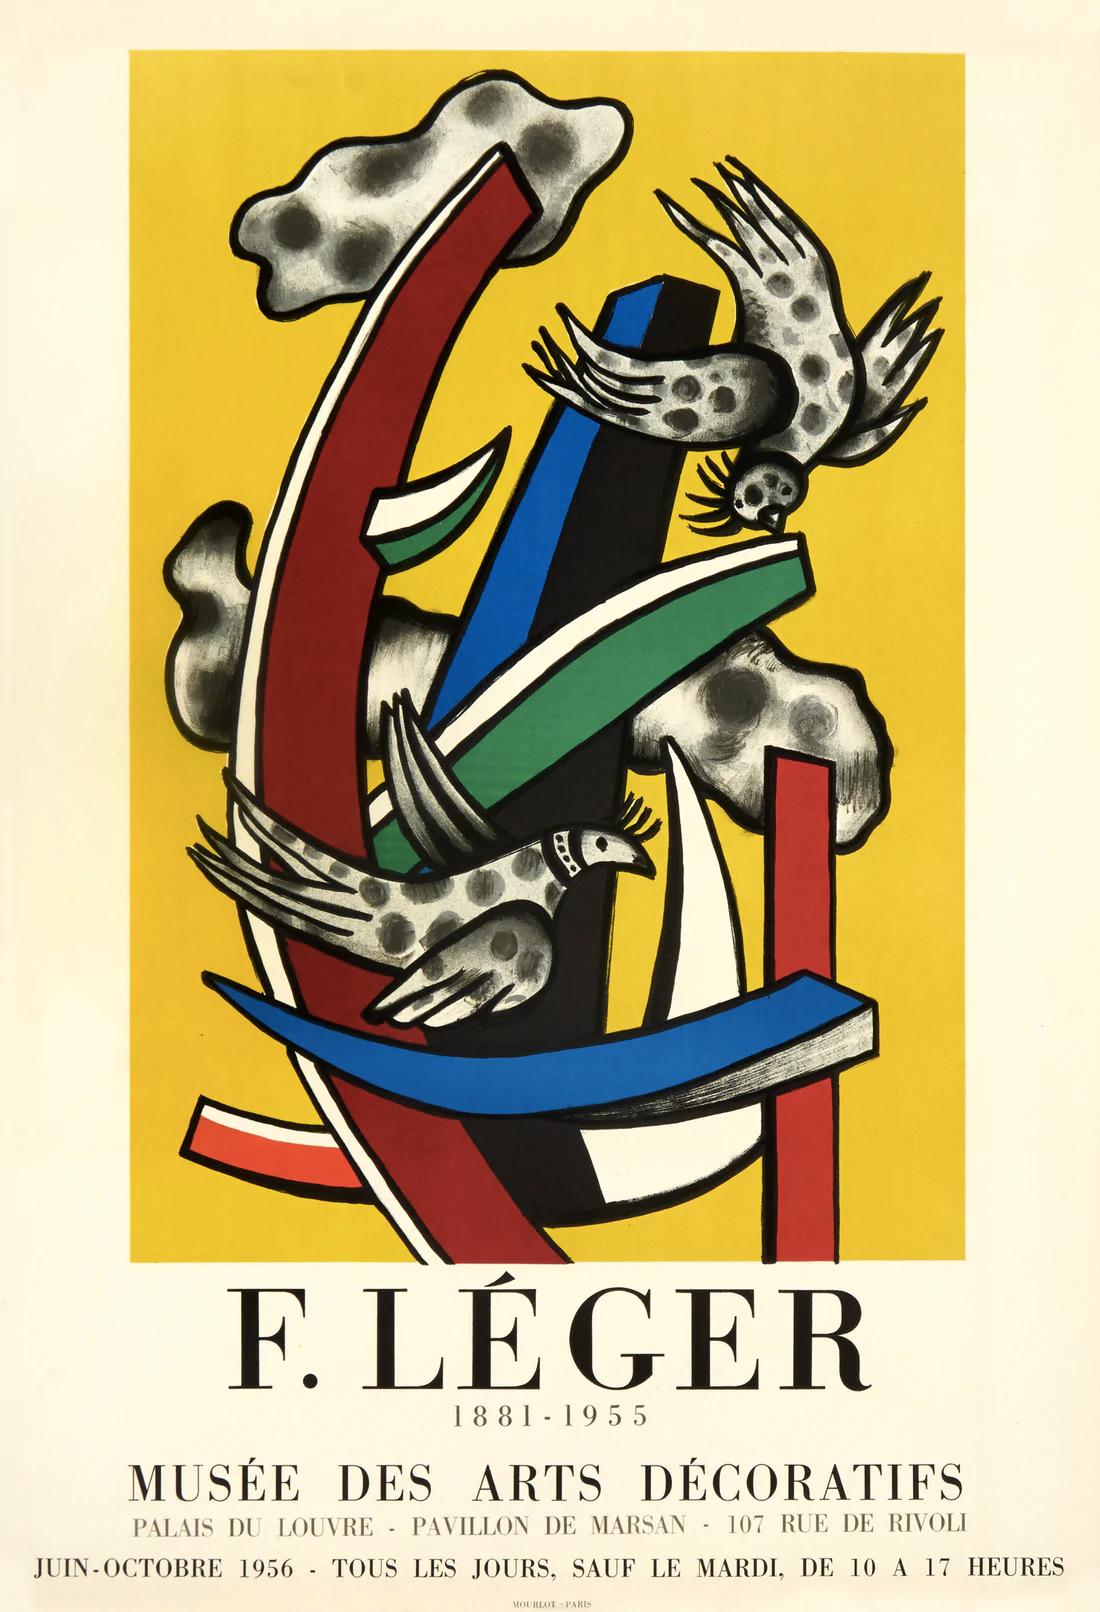 Musée des Arts Decoratifs by Fernand Leger, 1956 - Print by Fernand Léger